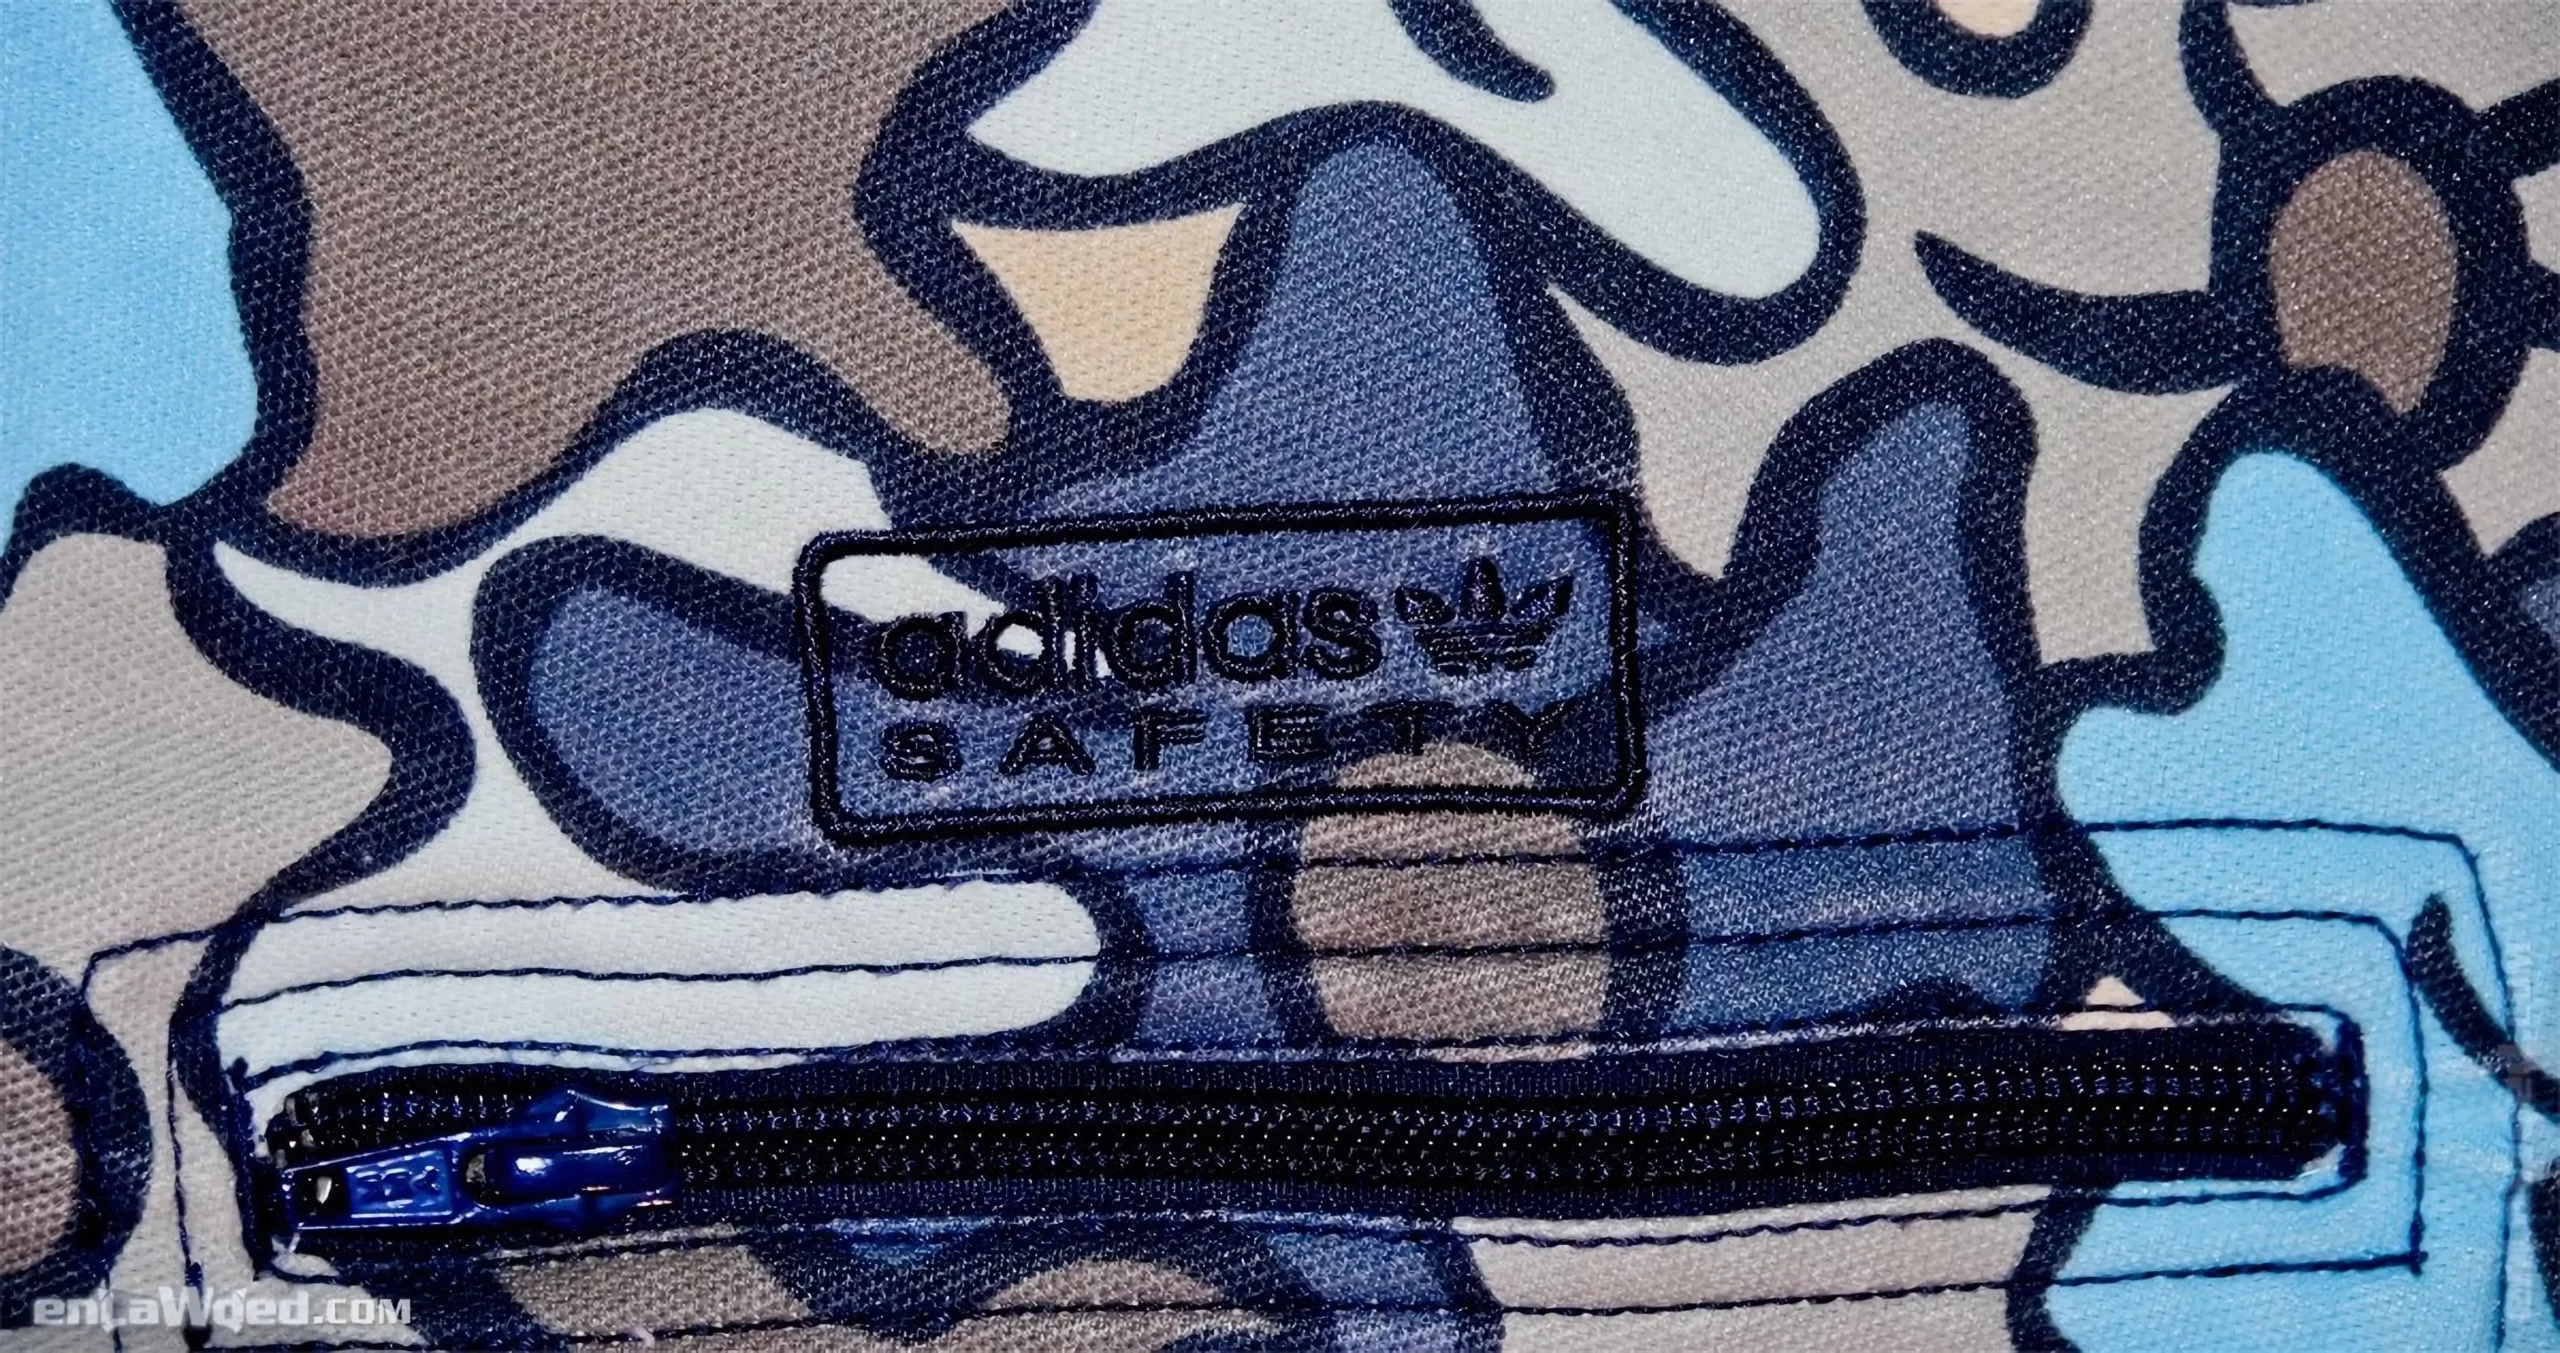 Men’s 2006 Adidas Originals Blue Safety Camo Track Top: Colossal (EnLawded.com file #lmchjnjt2xutmog64fu)